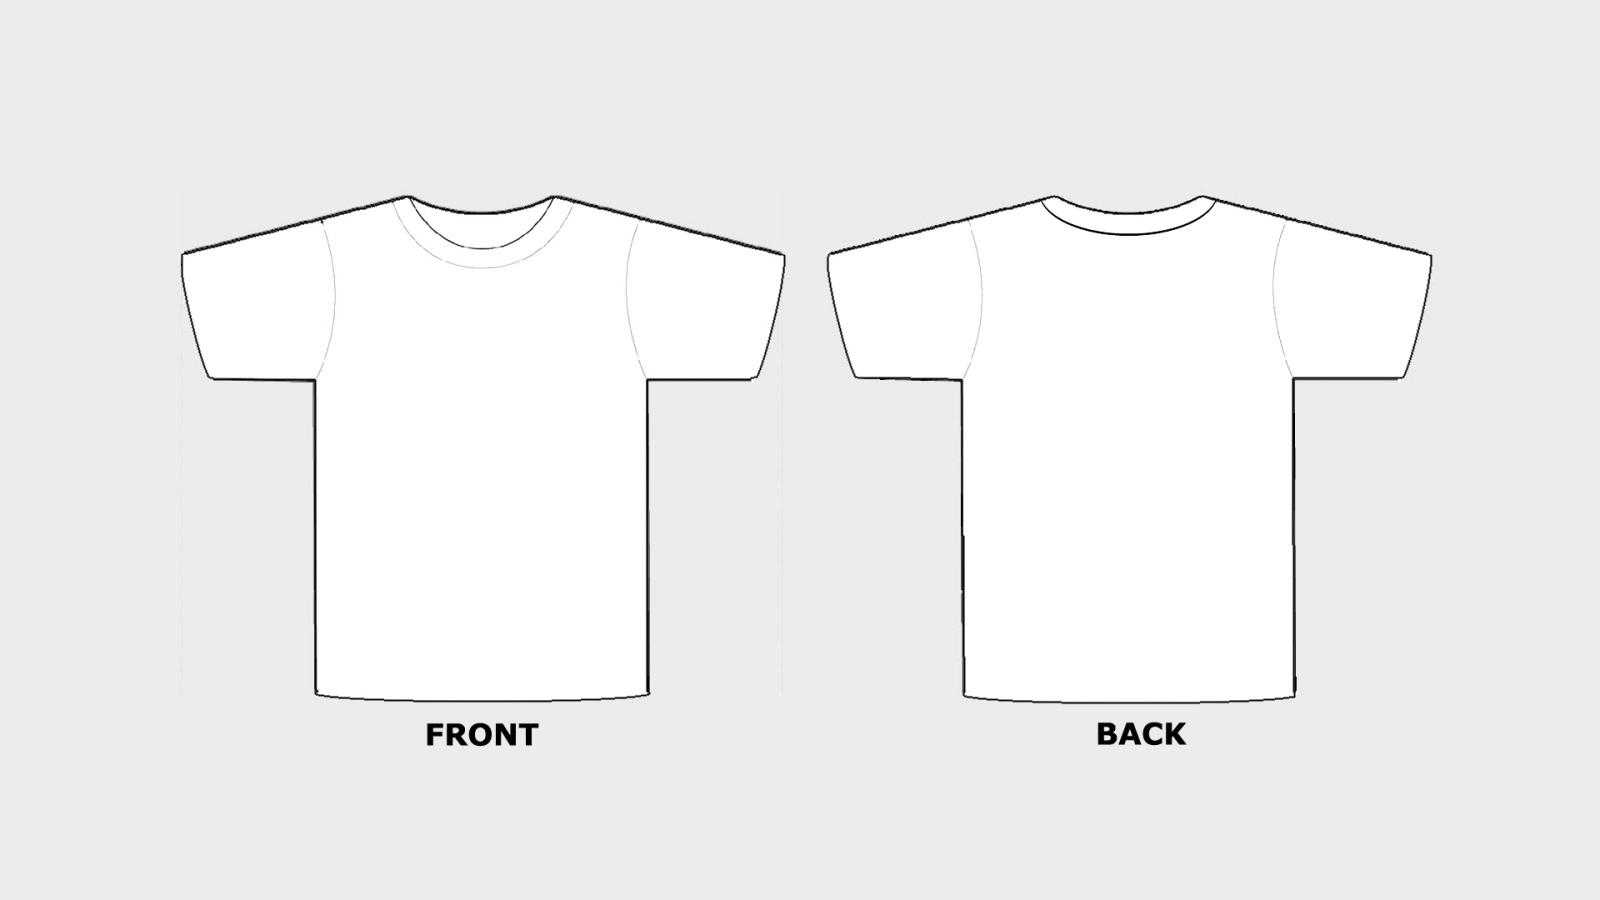 Blank T Shirt Worksheet | Printable Worksheets And Throughout Blank Tshirt Template Printable